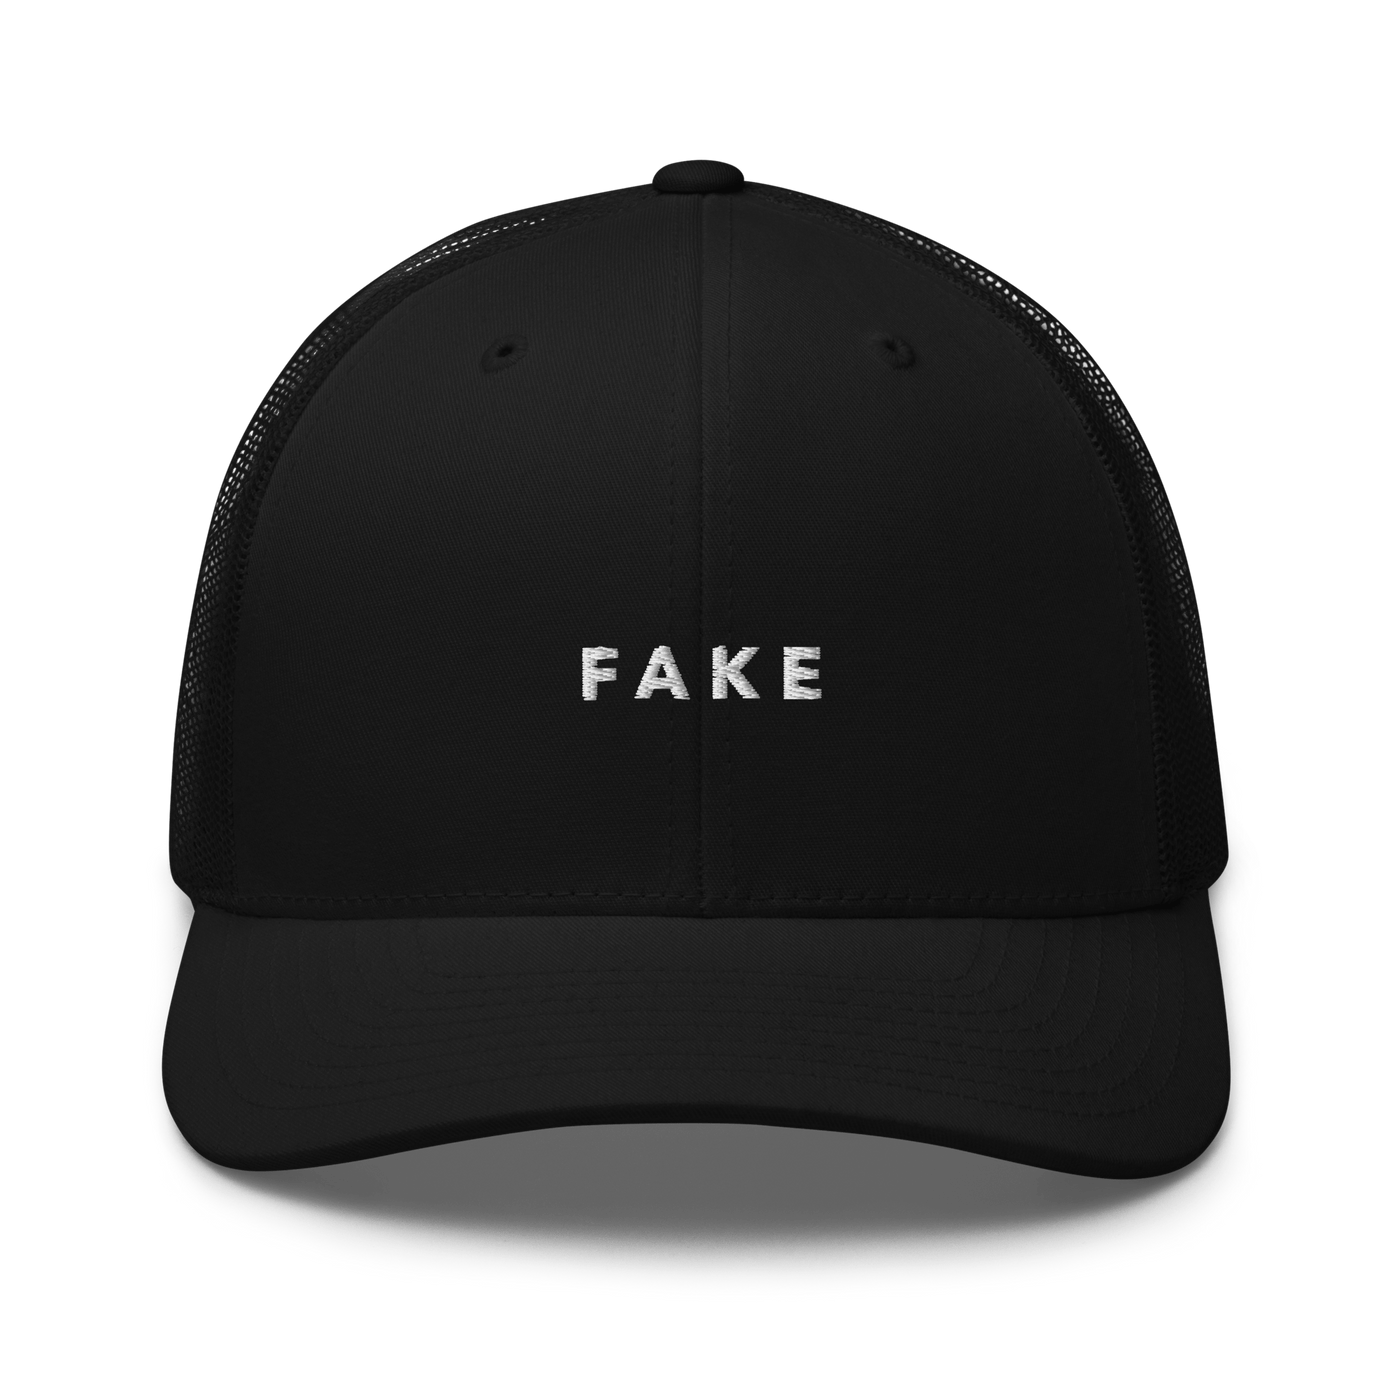 FAKE Trucker Cap - Black - - Just Another Cap Store